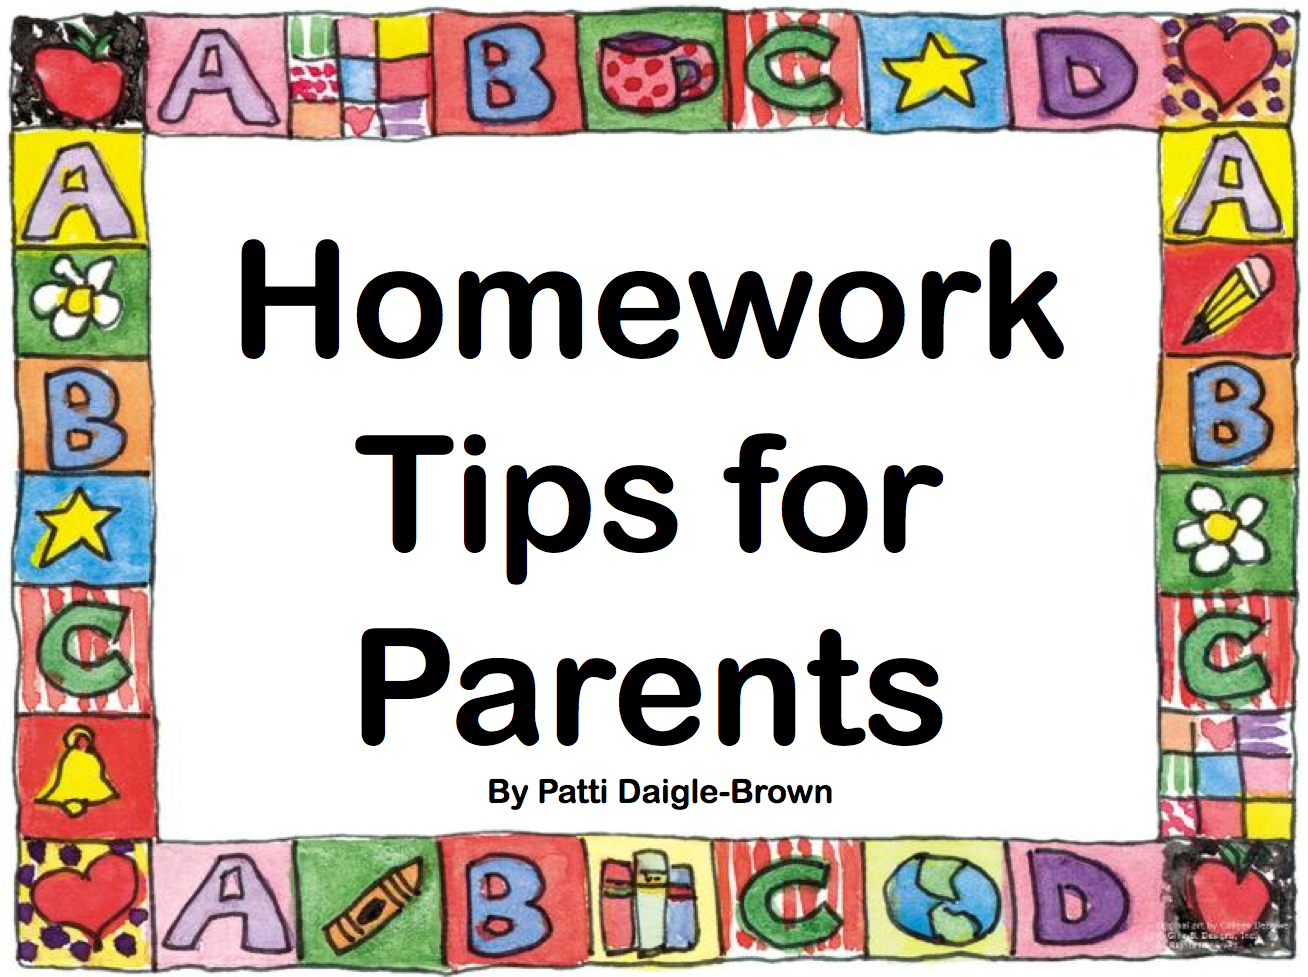 Parent resources for homework help